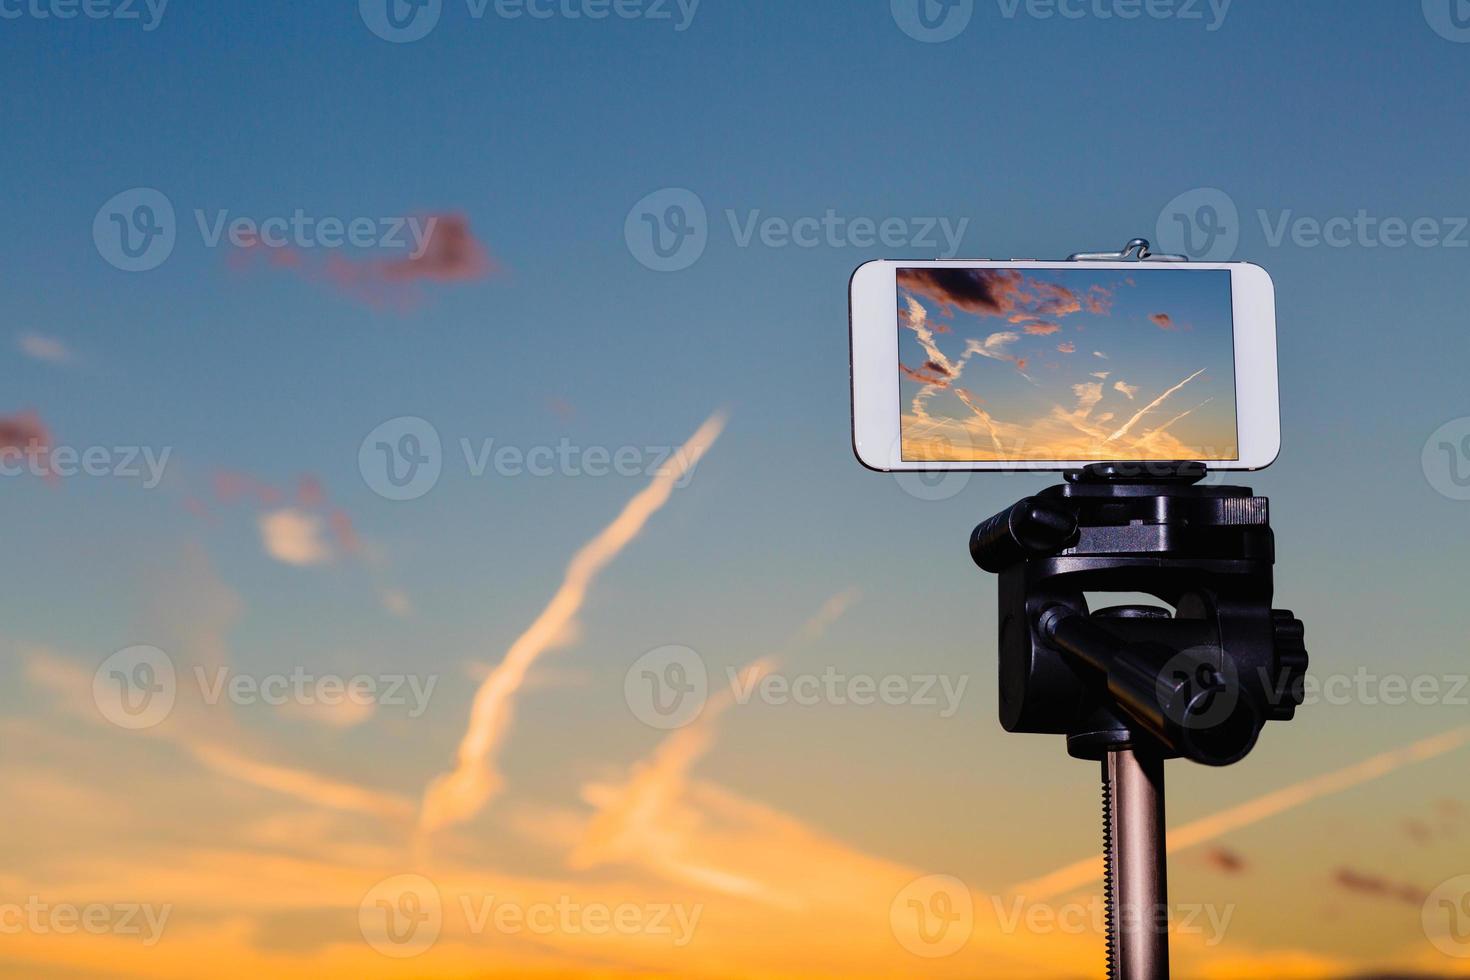 Smartphone on tripod capturing image of stunning sundown photo